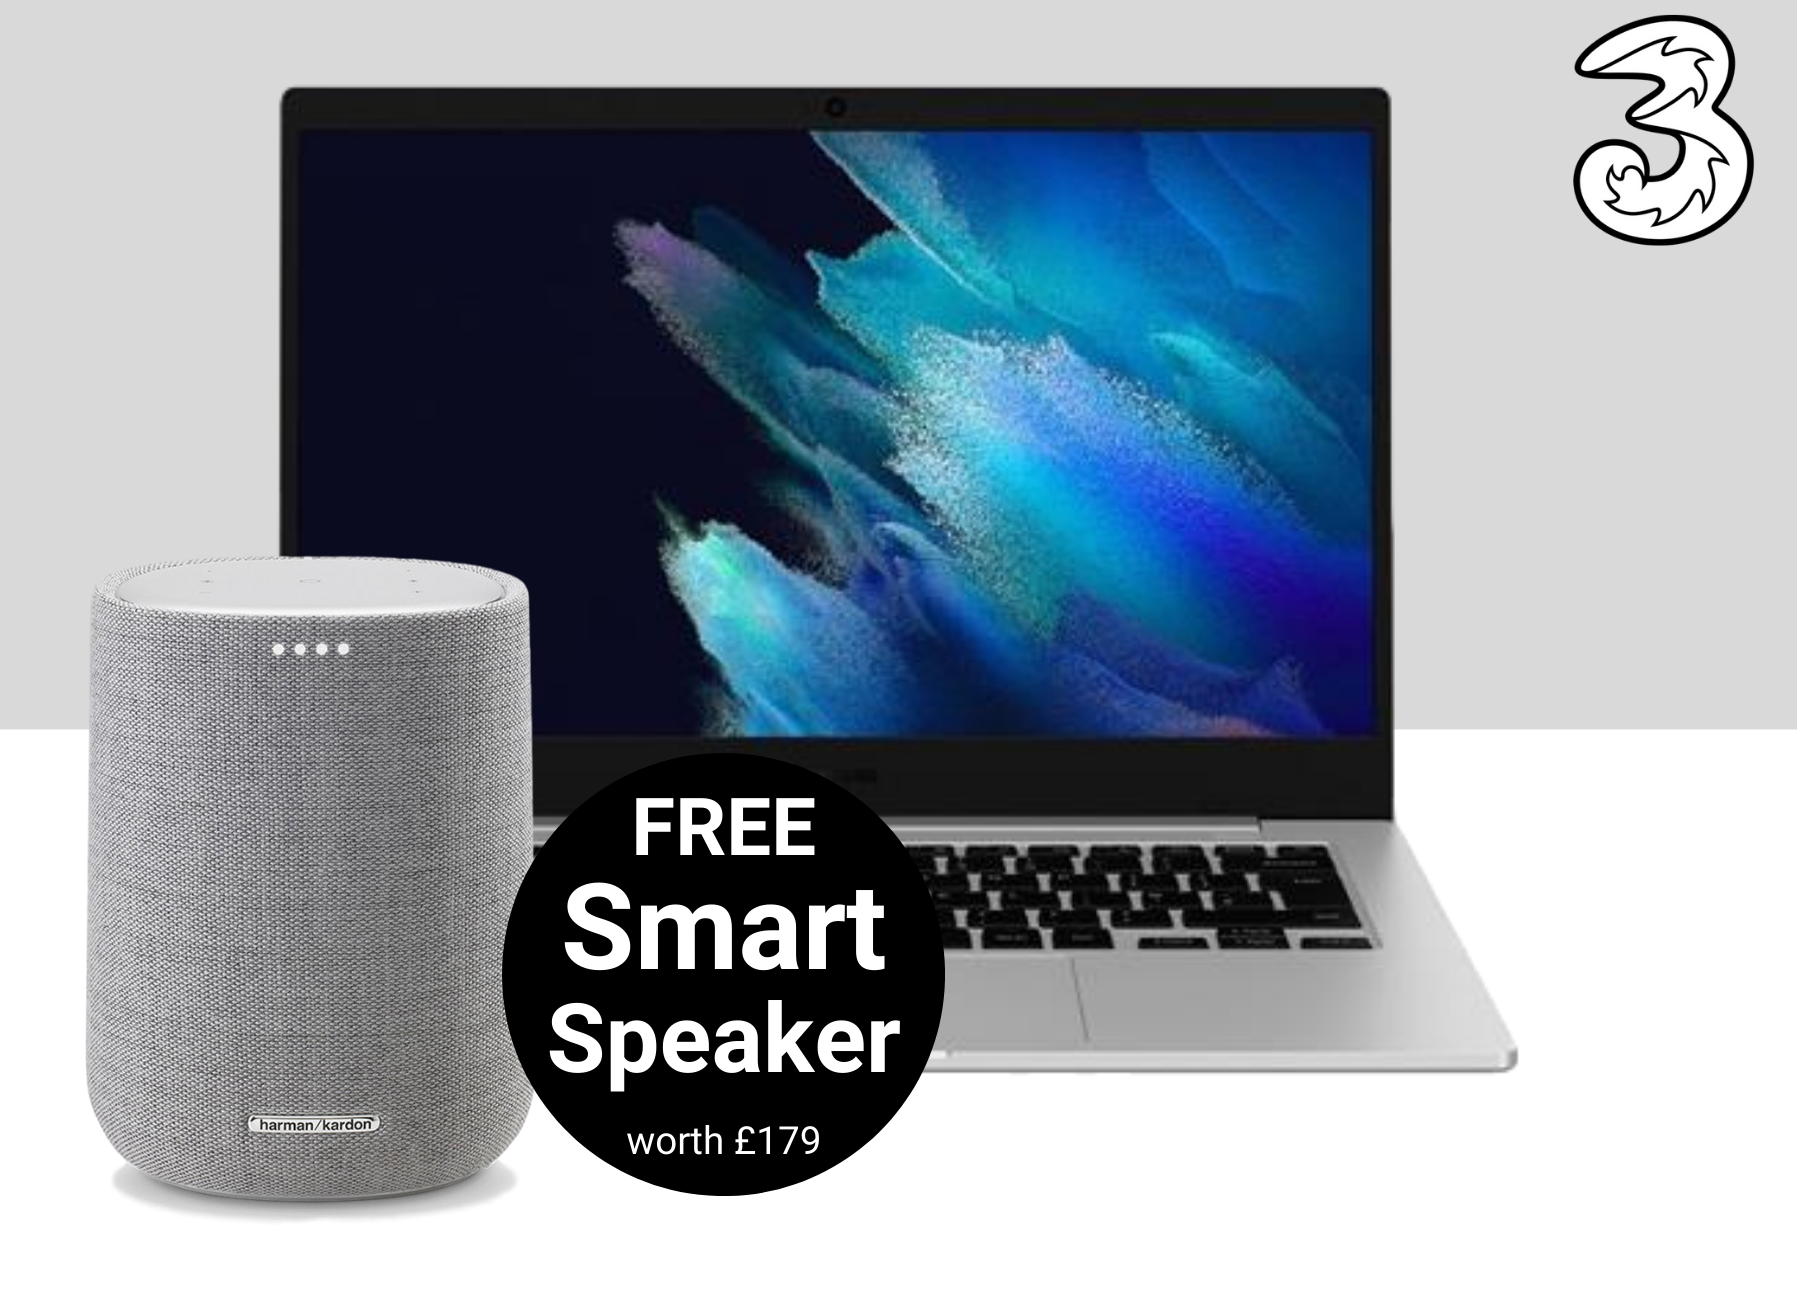 Free Wireless Smart Speaker with Galaxy Book Go Deals